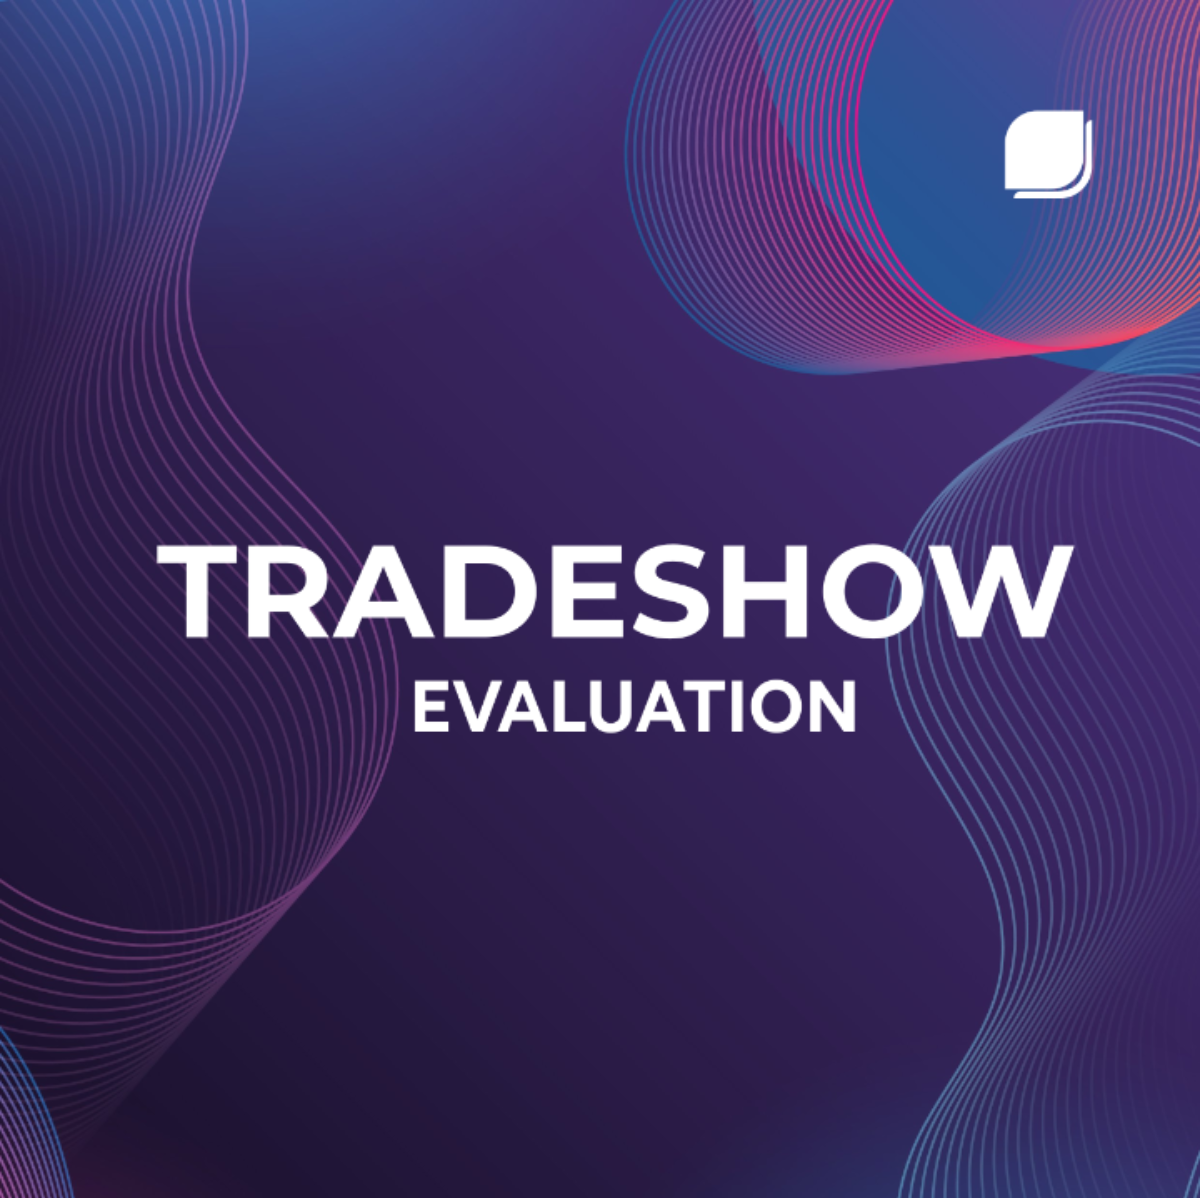 Tradeshow Evaluation Template